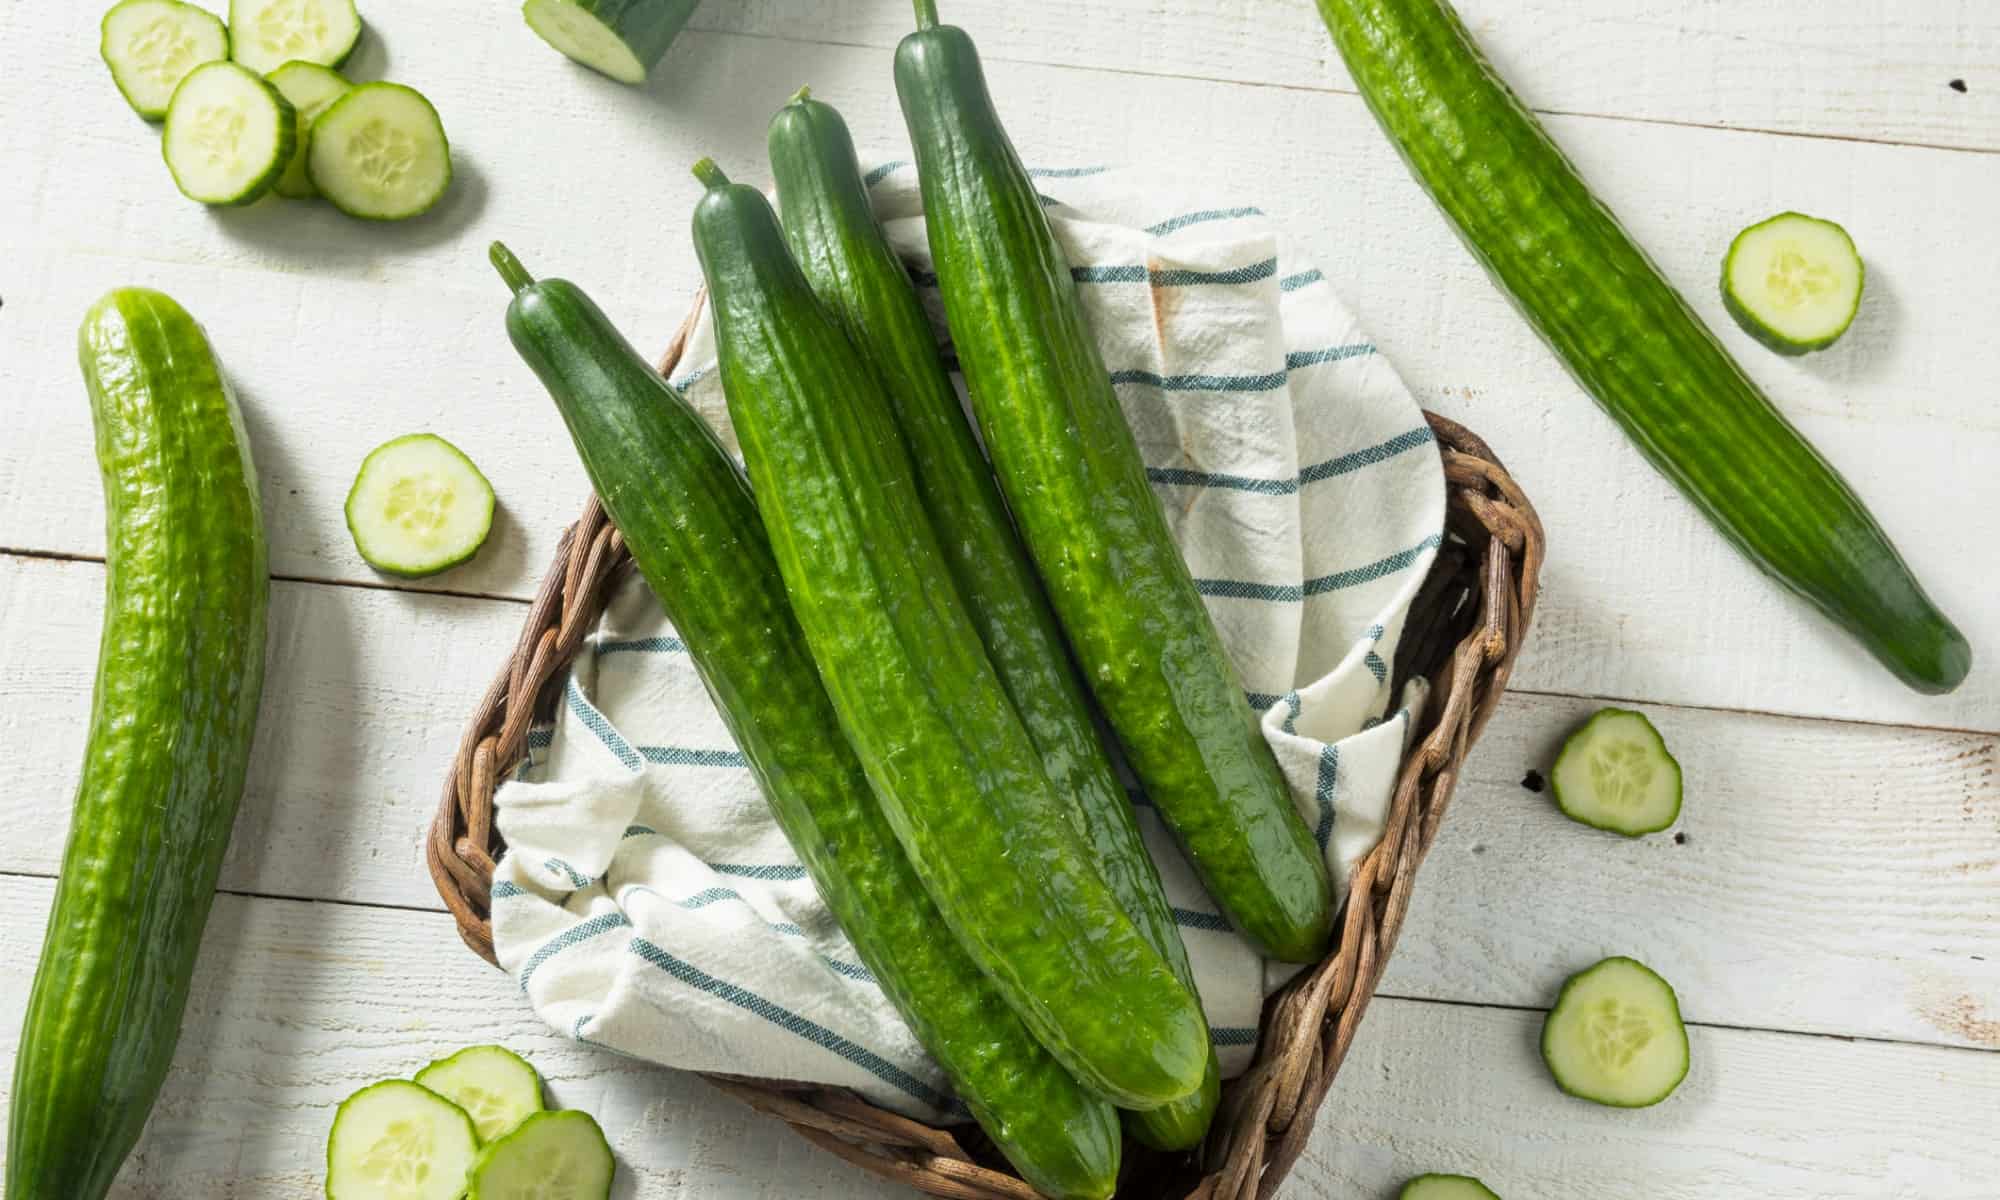 https://a-z-animals.com/media/2022/08/healthy-organic-green-english-cucumbers-picture-id941591668.jpg